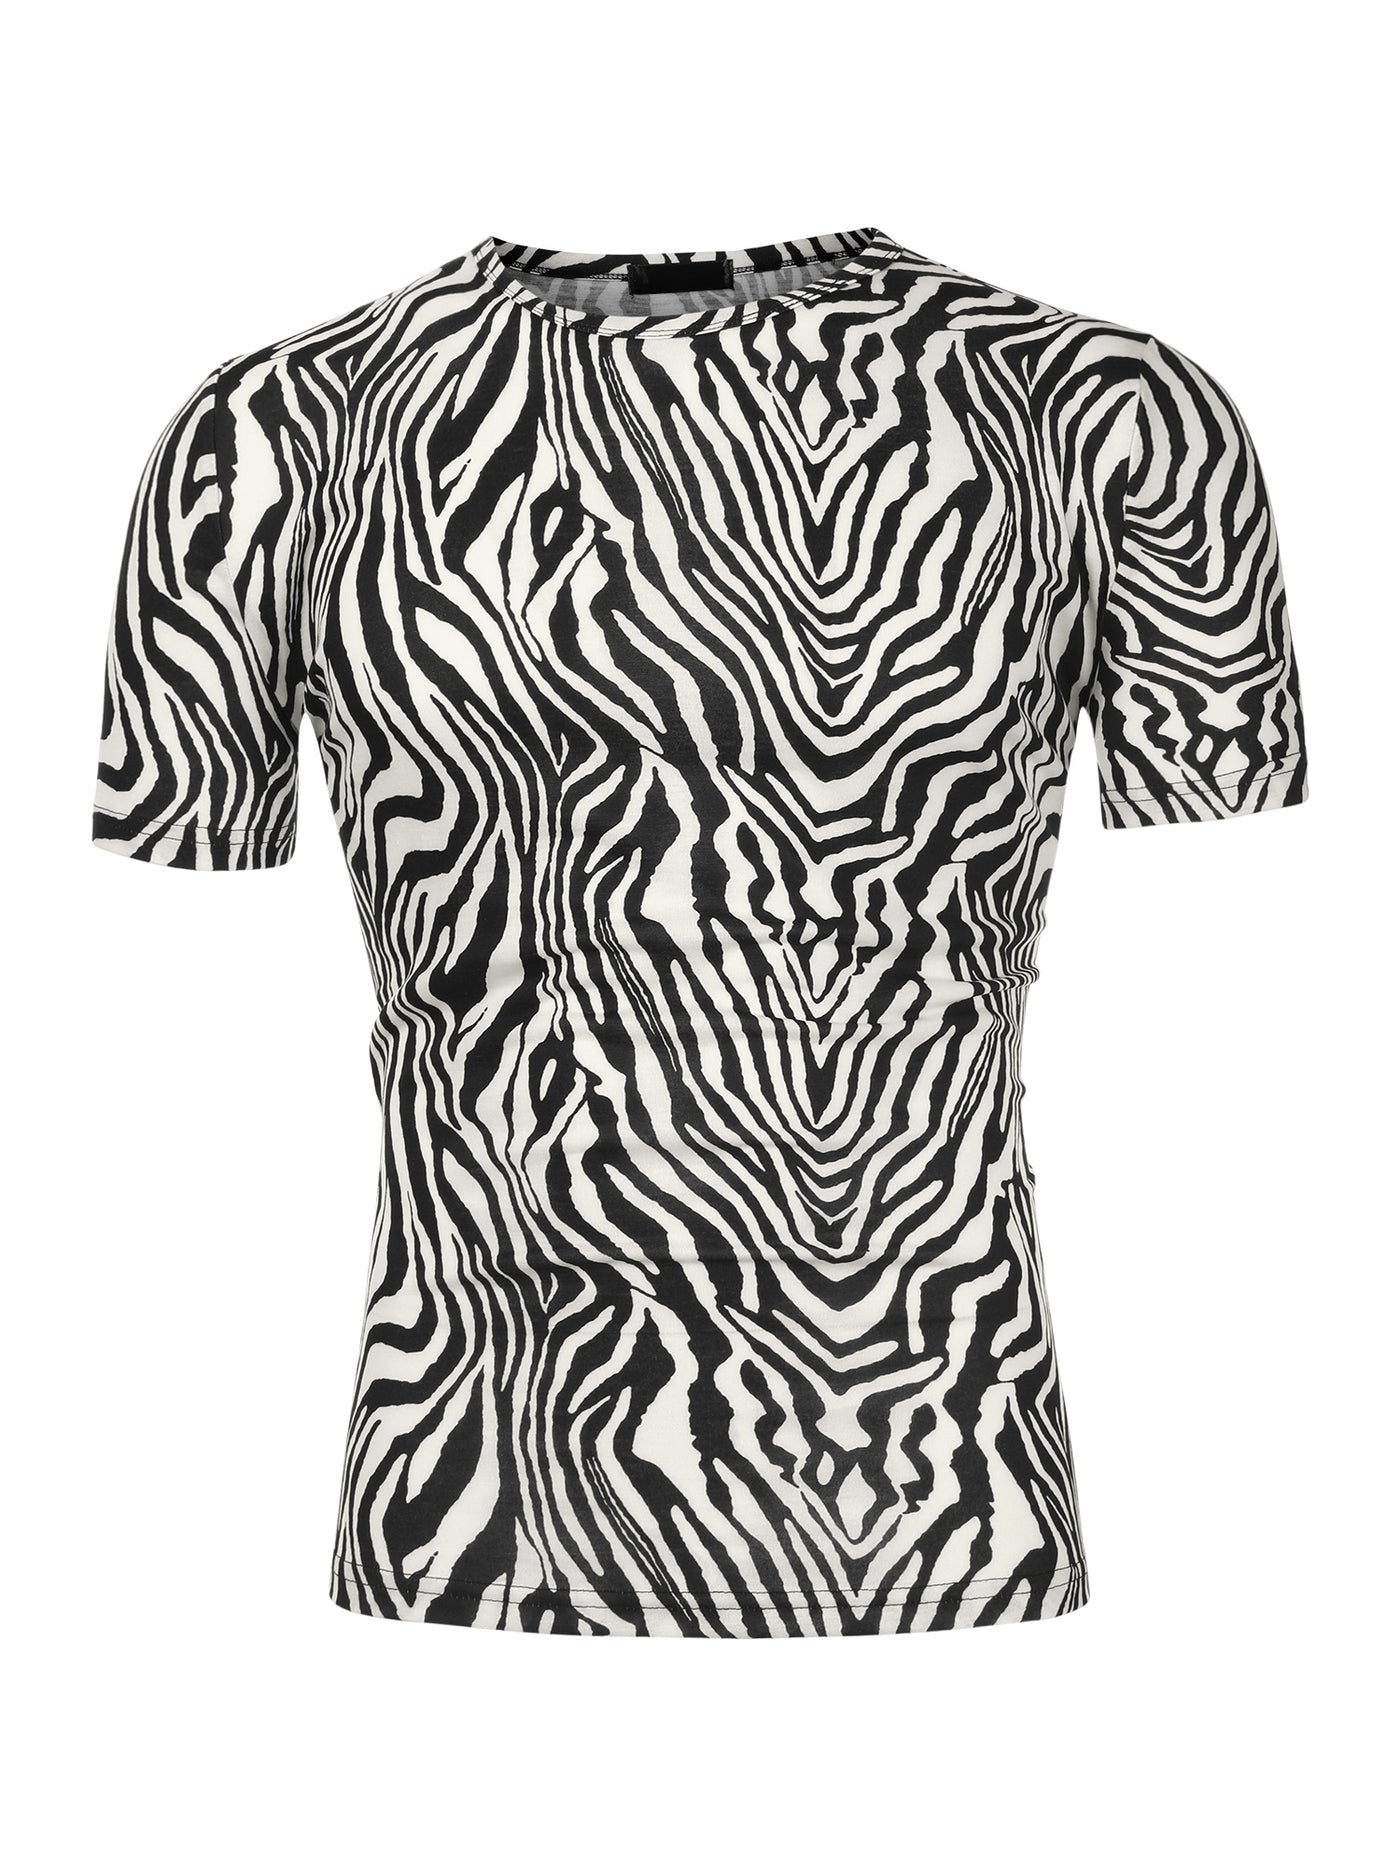 Bublédon Short Sleeve Crew Neck Stretchy Leopard Print T-shirt